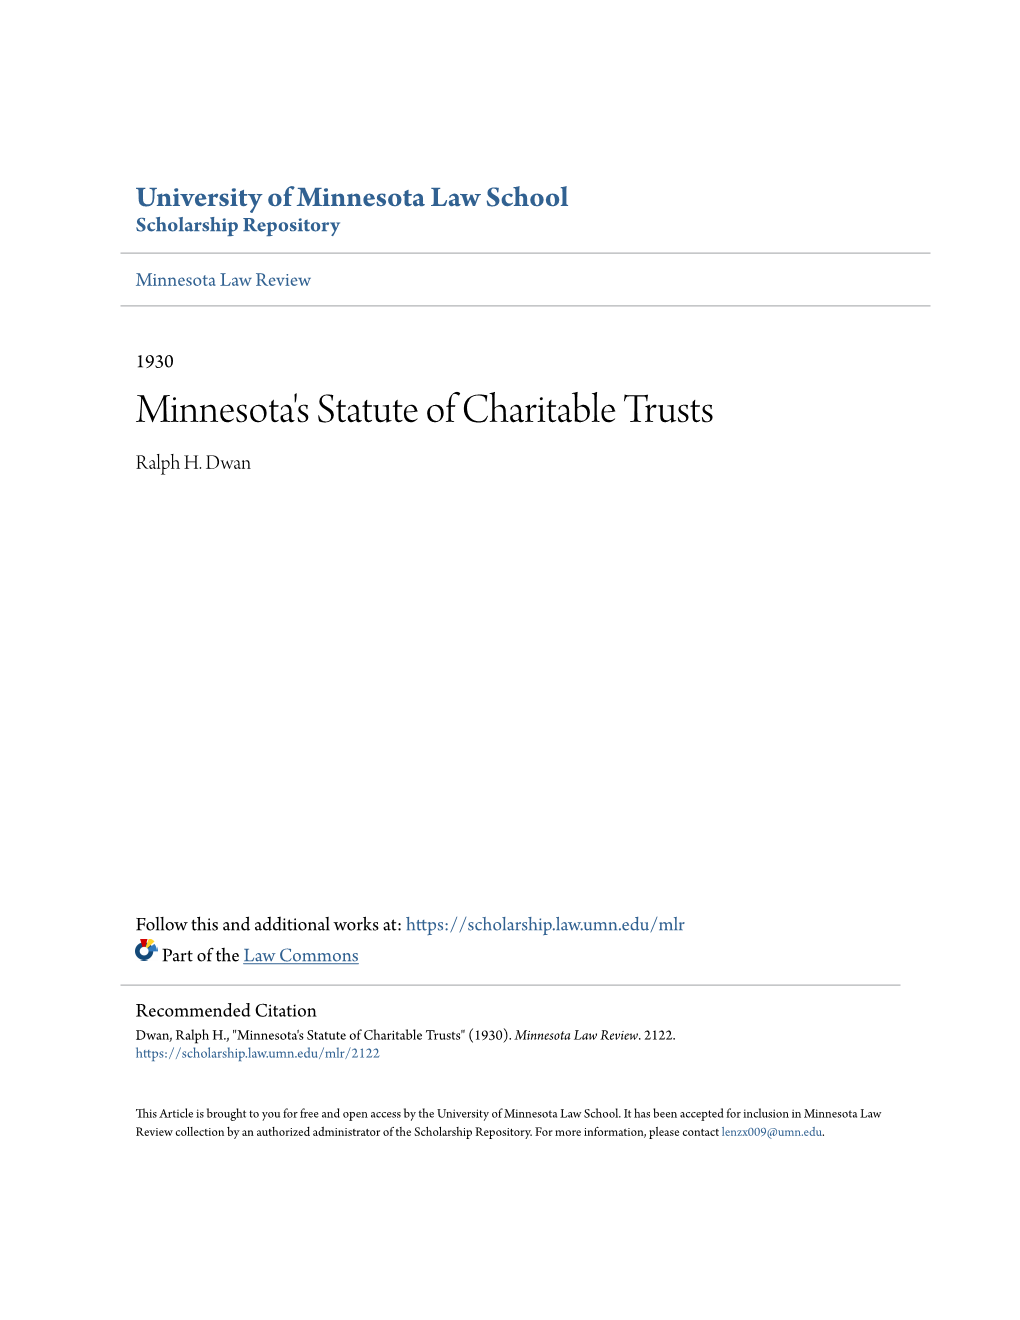 Minnesota's Statute of Charitable Trusts Ralph H